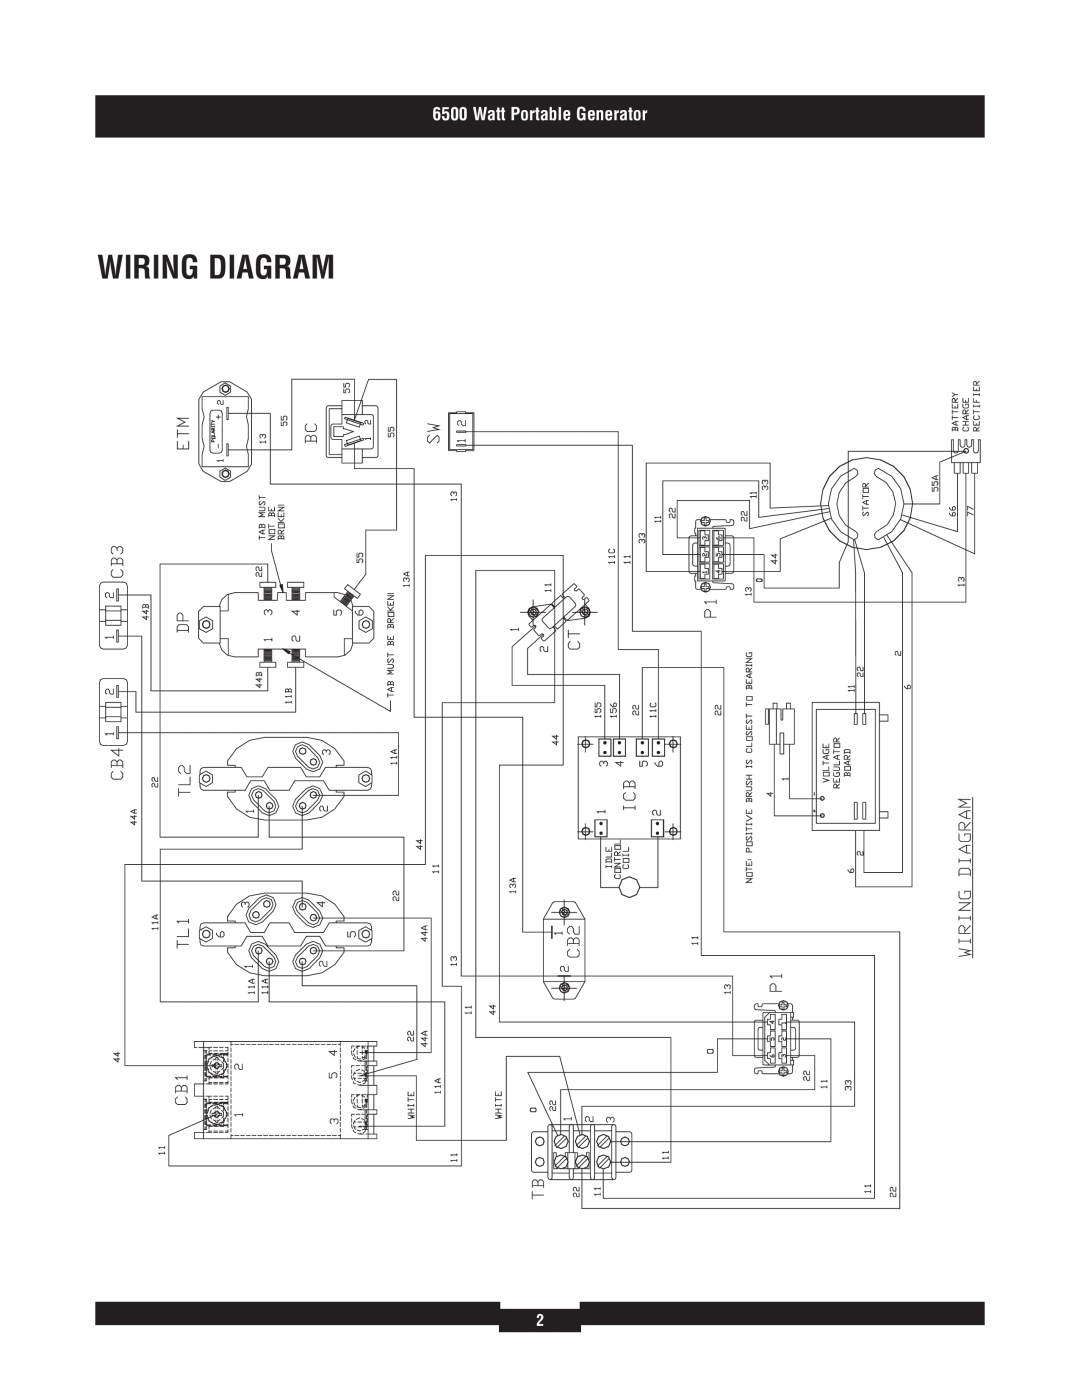 Briggs & Stratton 030336 manual Wiring Diagram, Watt Portable Generator 